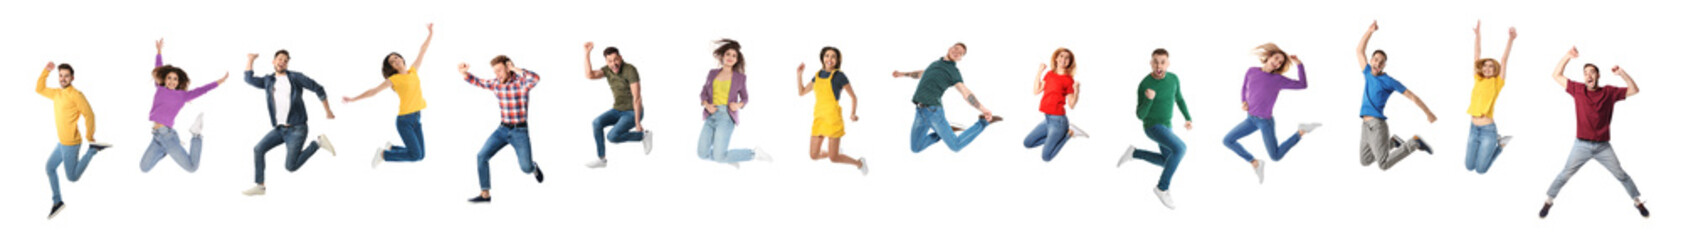 Fototapeta Collage of emotional people jumping on white background. Banner design obraz